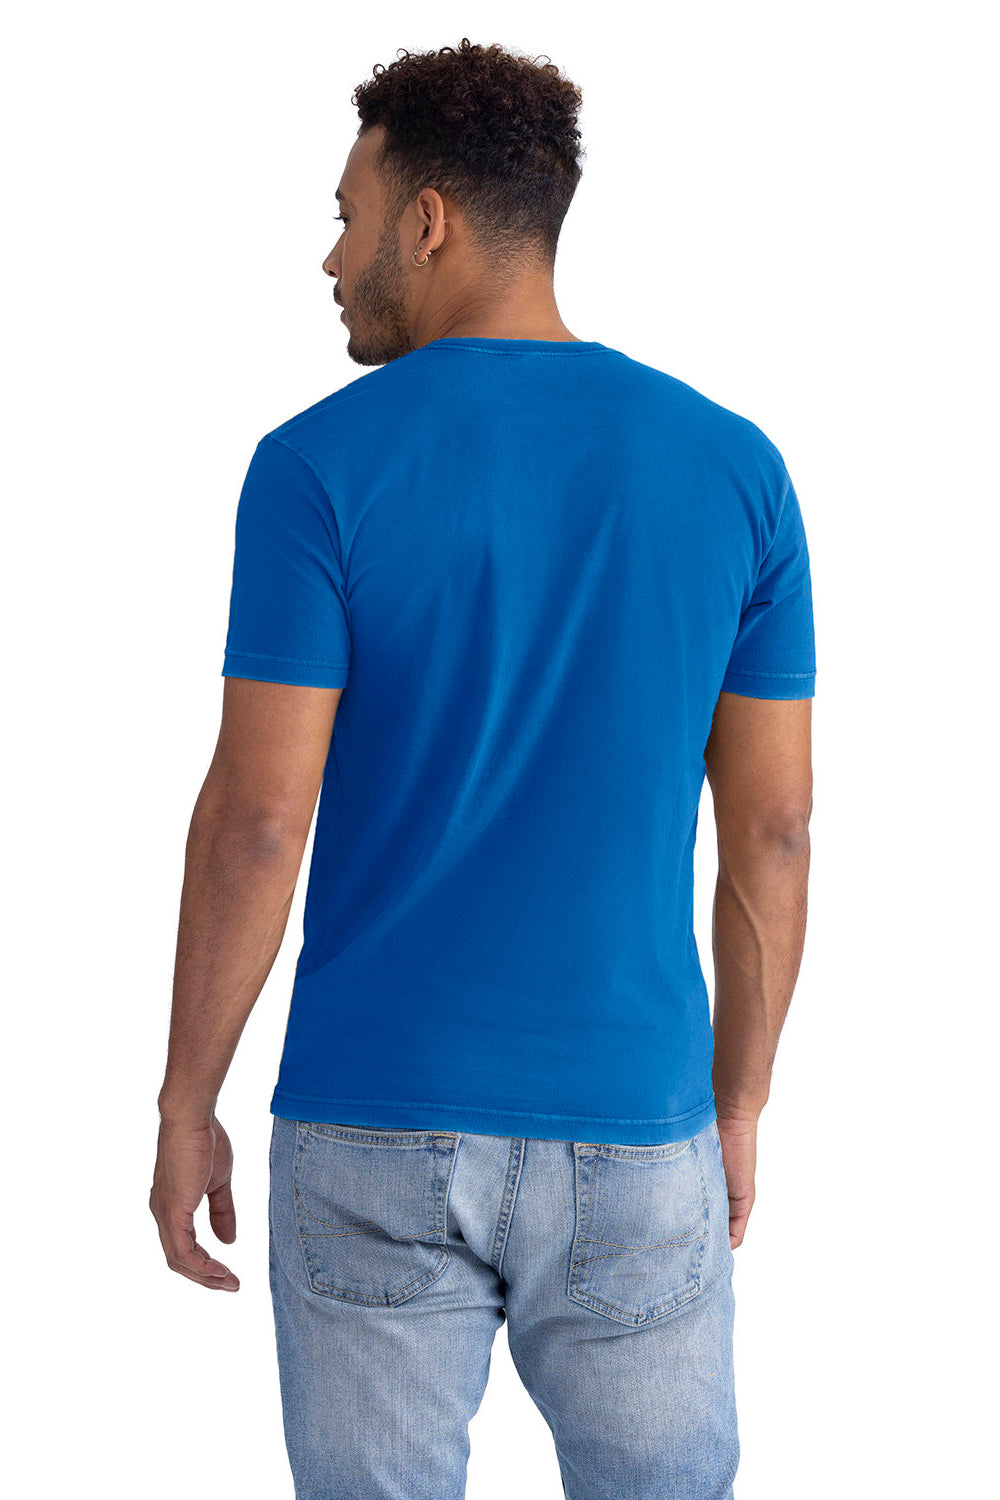 Next Level 3600SW Mens Soft Wash Short Sleeve Crewneck T-Shirt Royal Blue Back